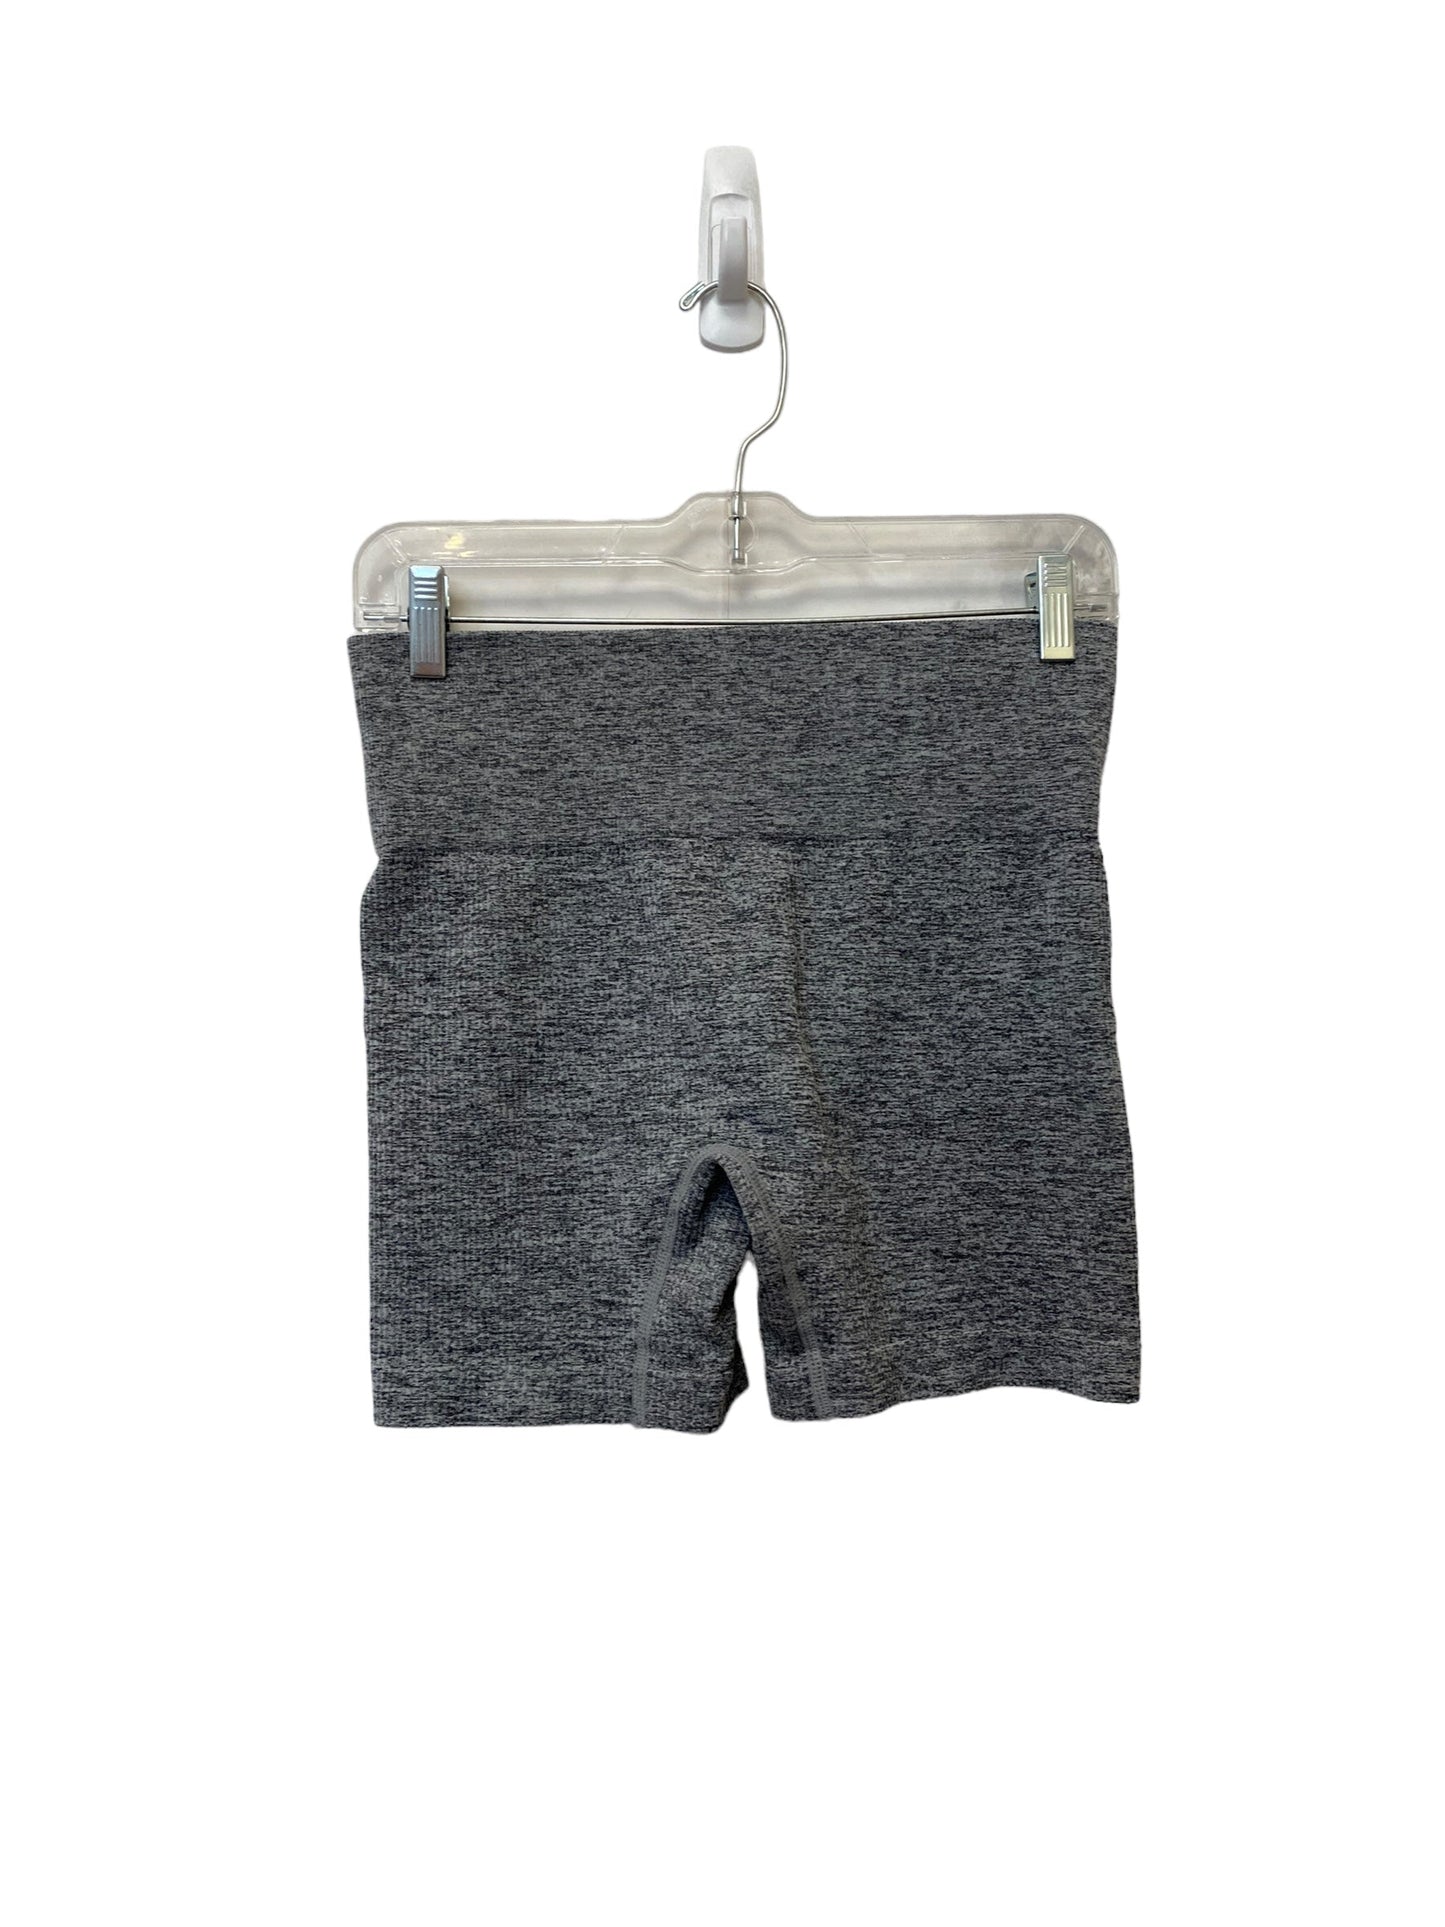 Grey Athletic Shorts Colsie, Size M